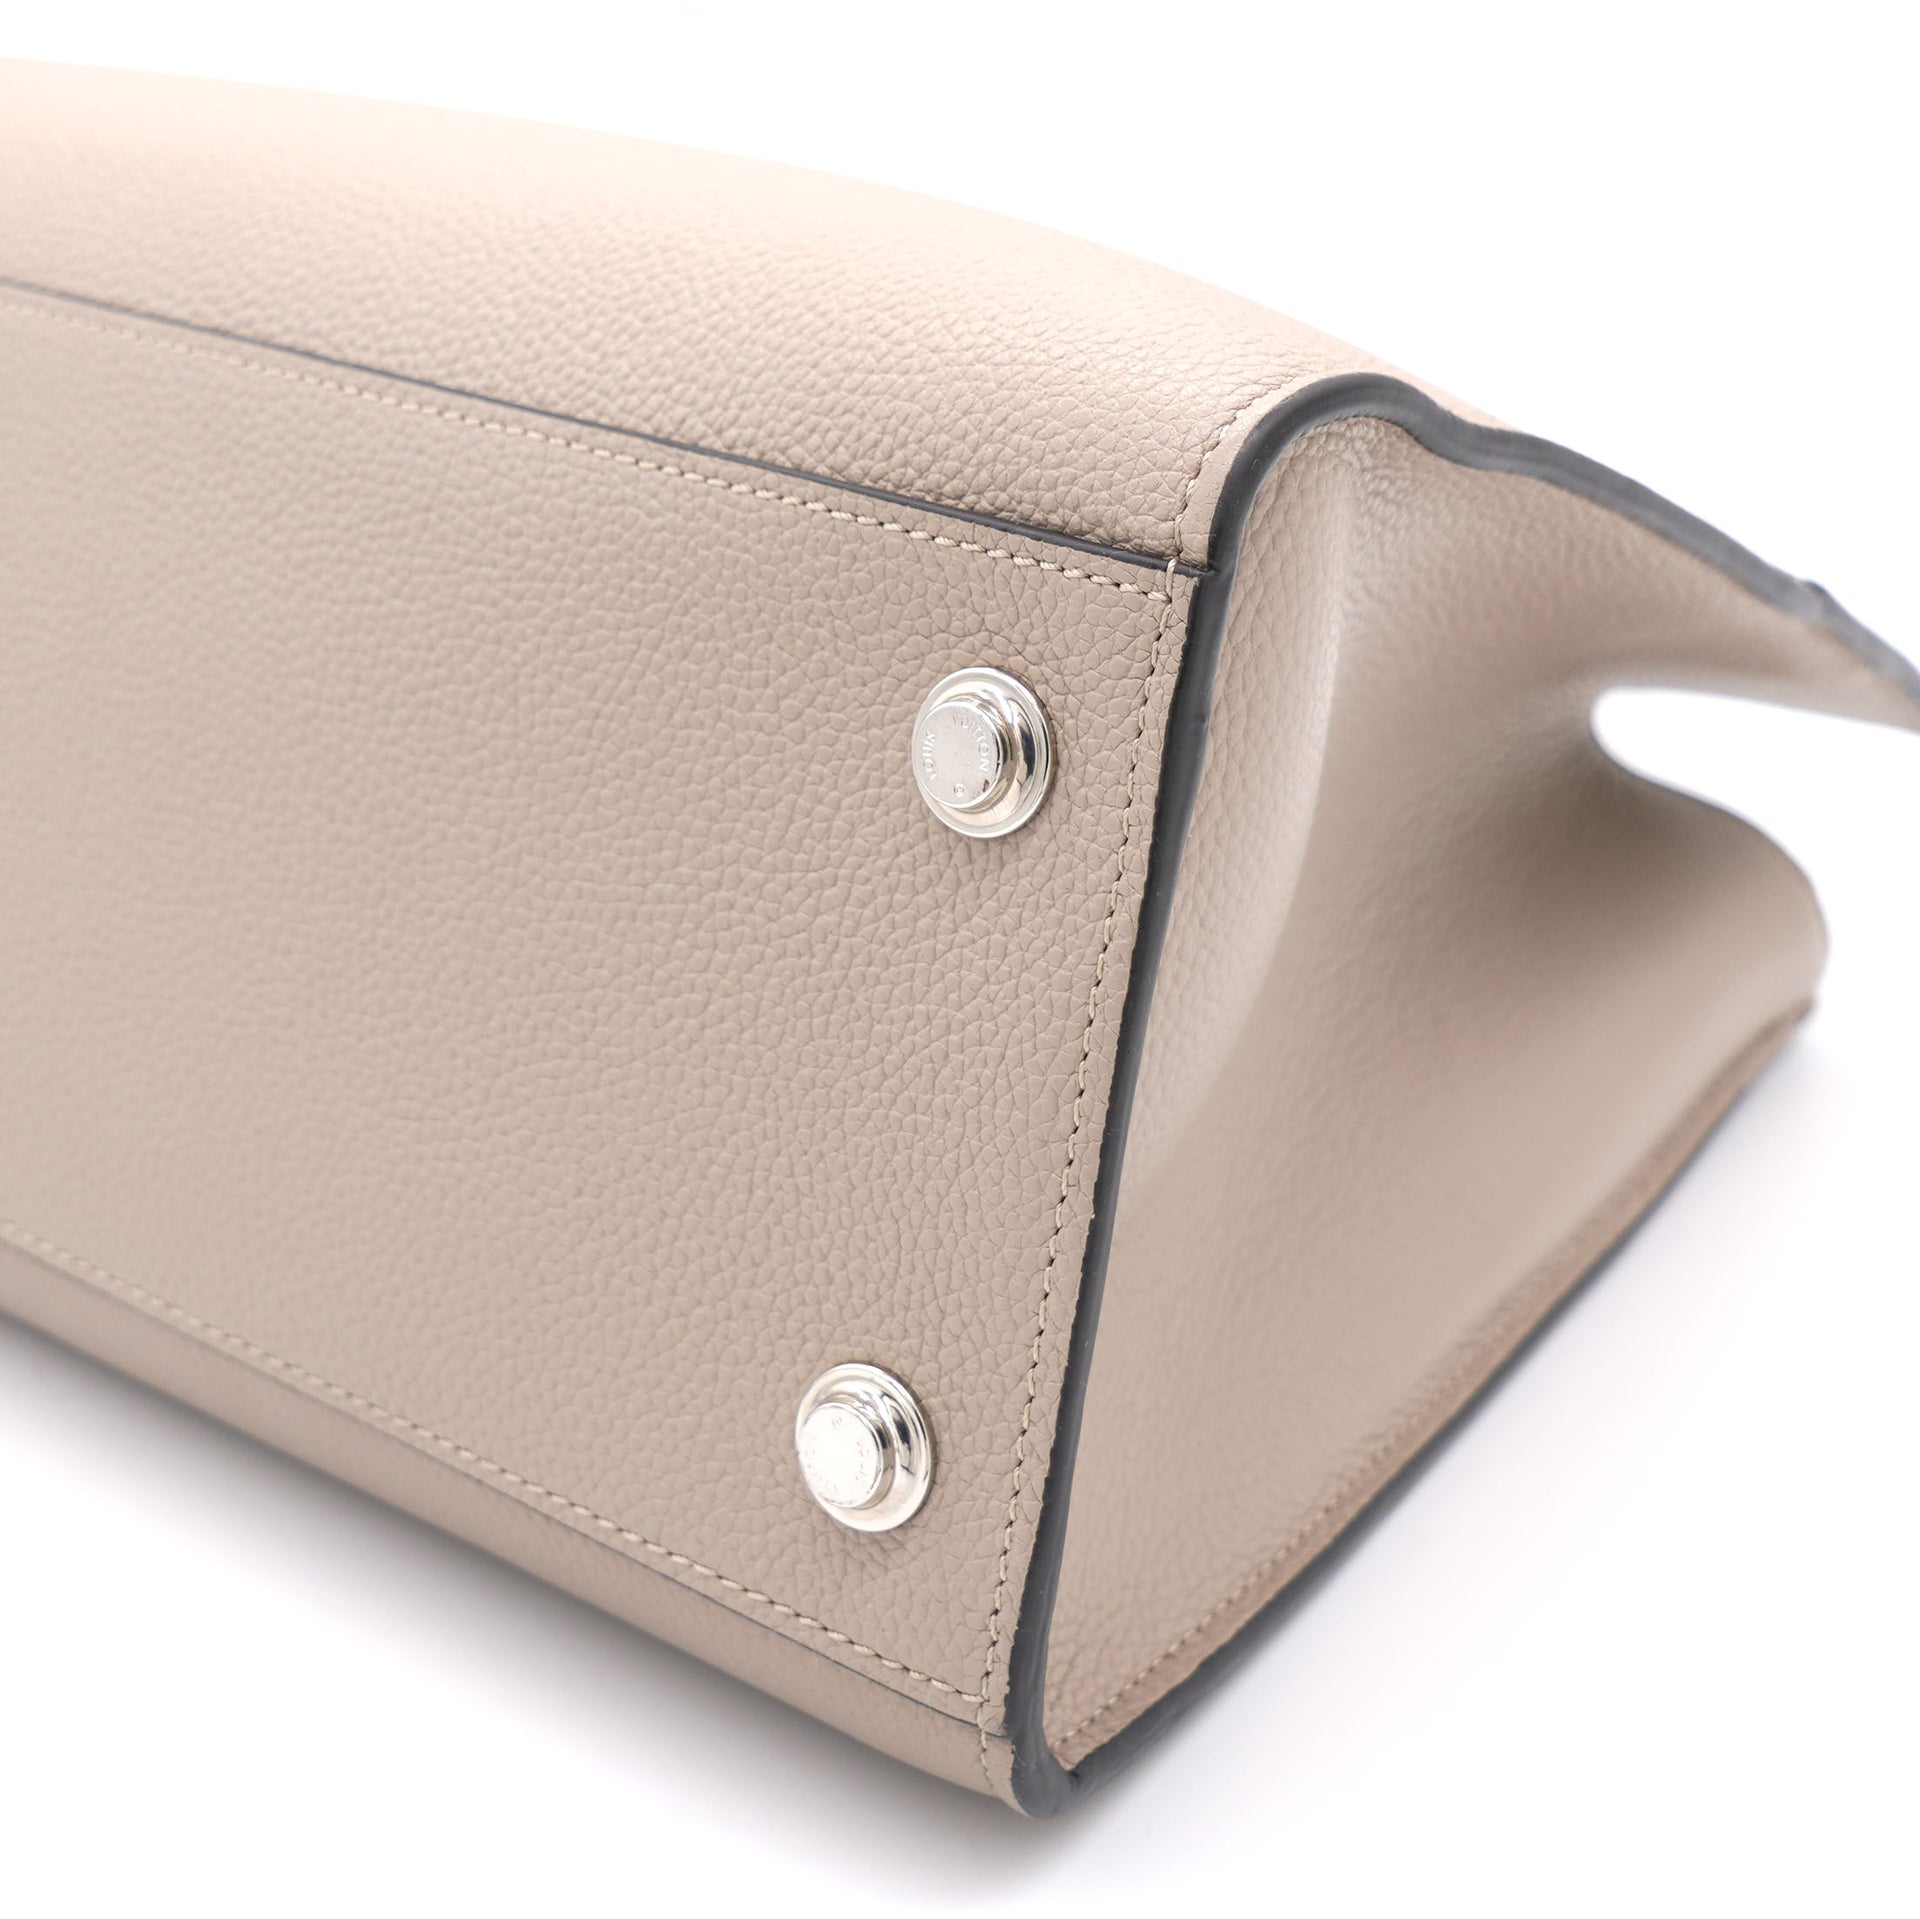 Louis Vuitton - Authenticated Nano Noé Handbag - Leather Beige for Women, Very Good Condition